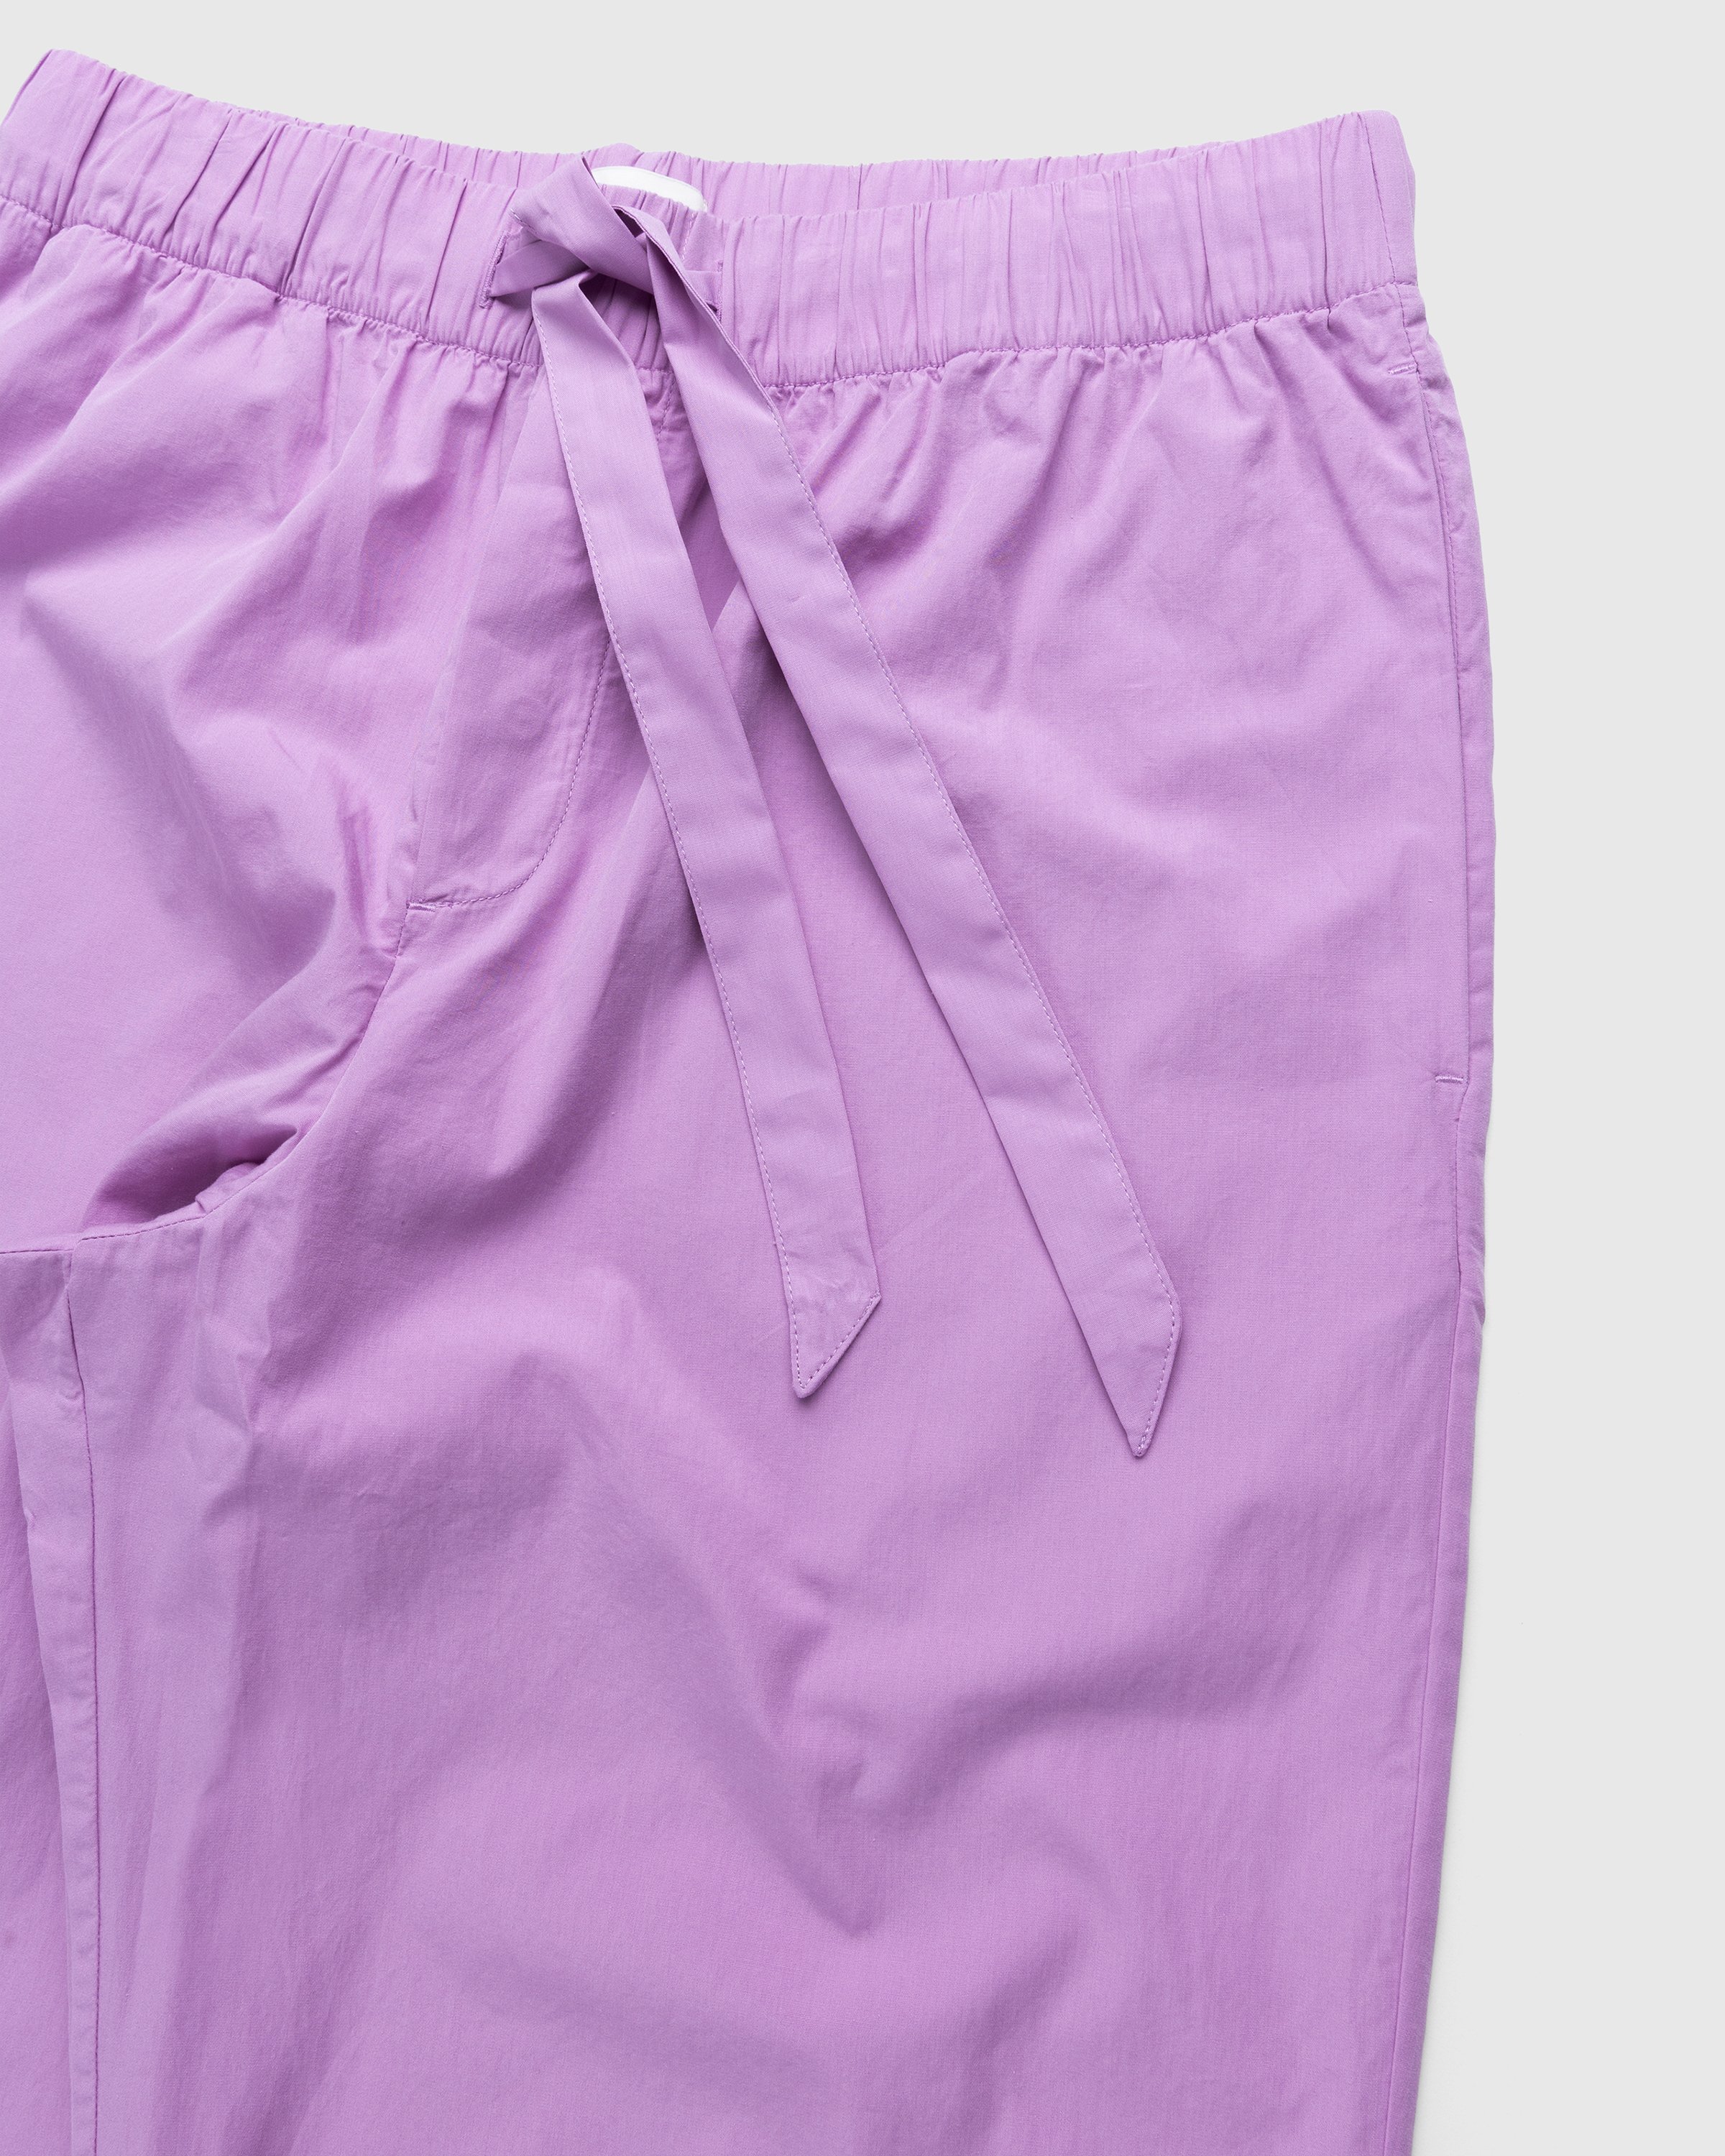 Tekla - Cotton Poplin Pyjamas Pants Purple Pink - Clothing - Pink - Image 3